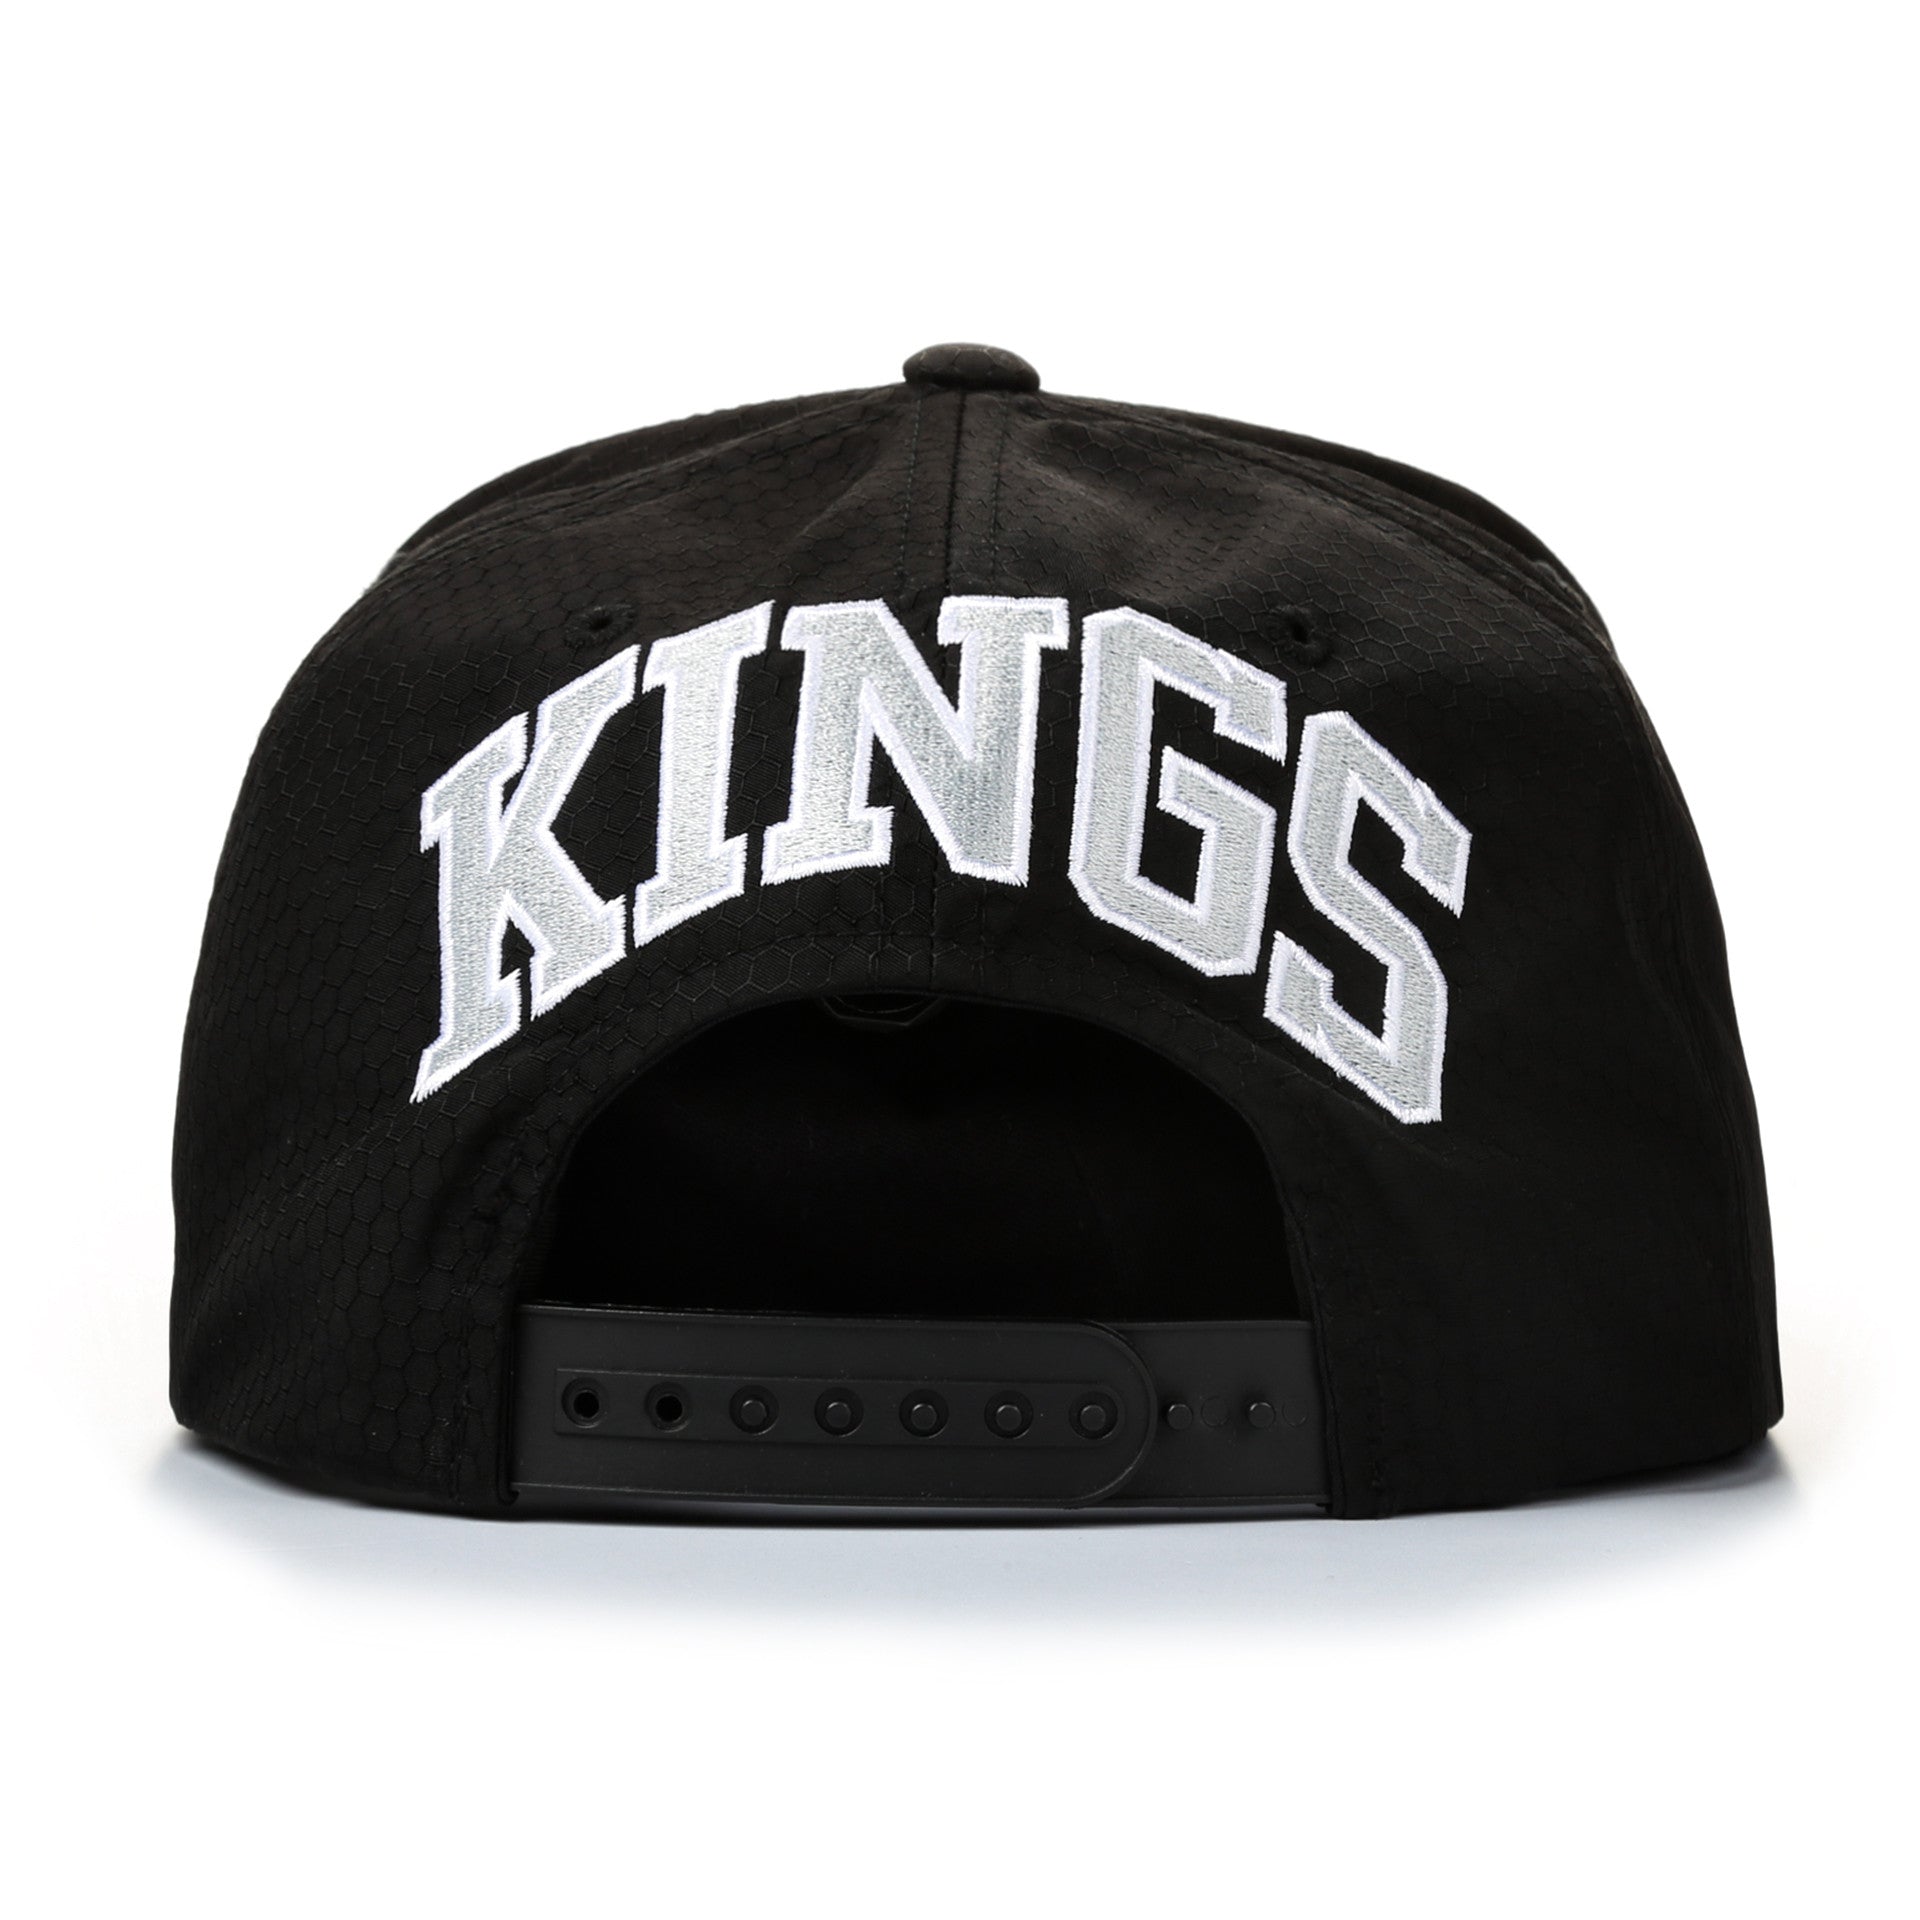 Mitchell & Ness Los Angeles Kings Caps Black, Unisex